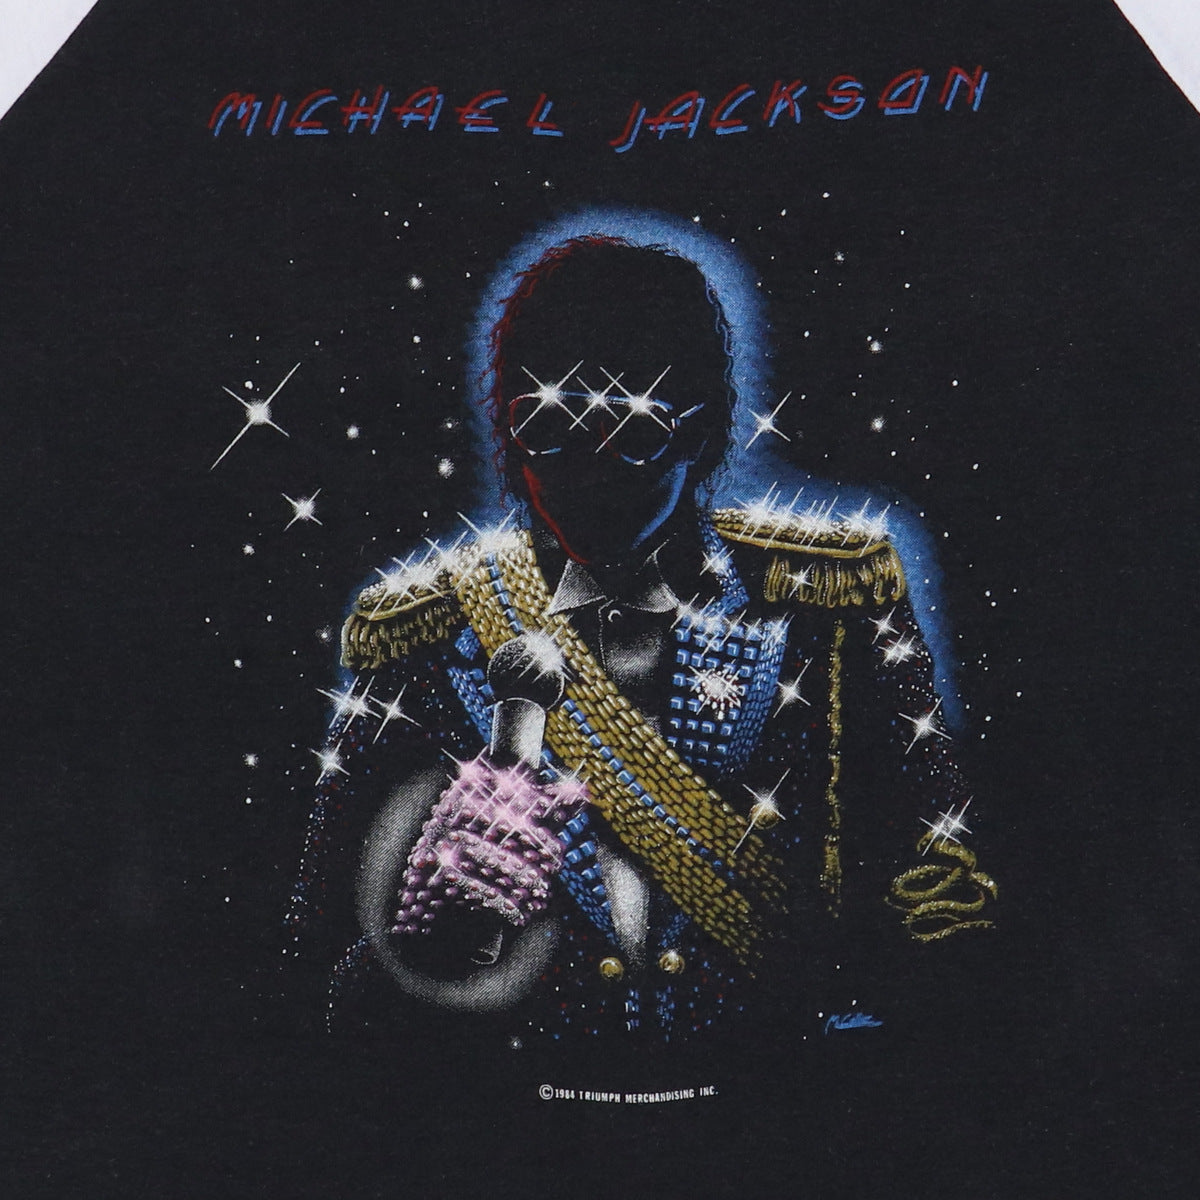 Wyco Vintage 1984 Michael Jackson Victory Tour Jersey Shirt